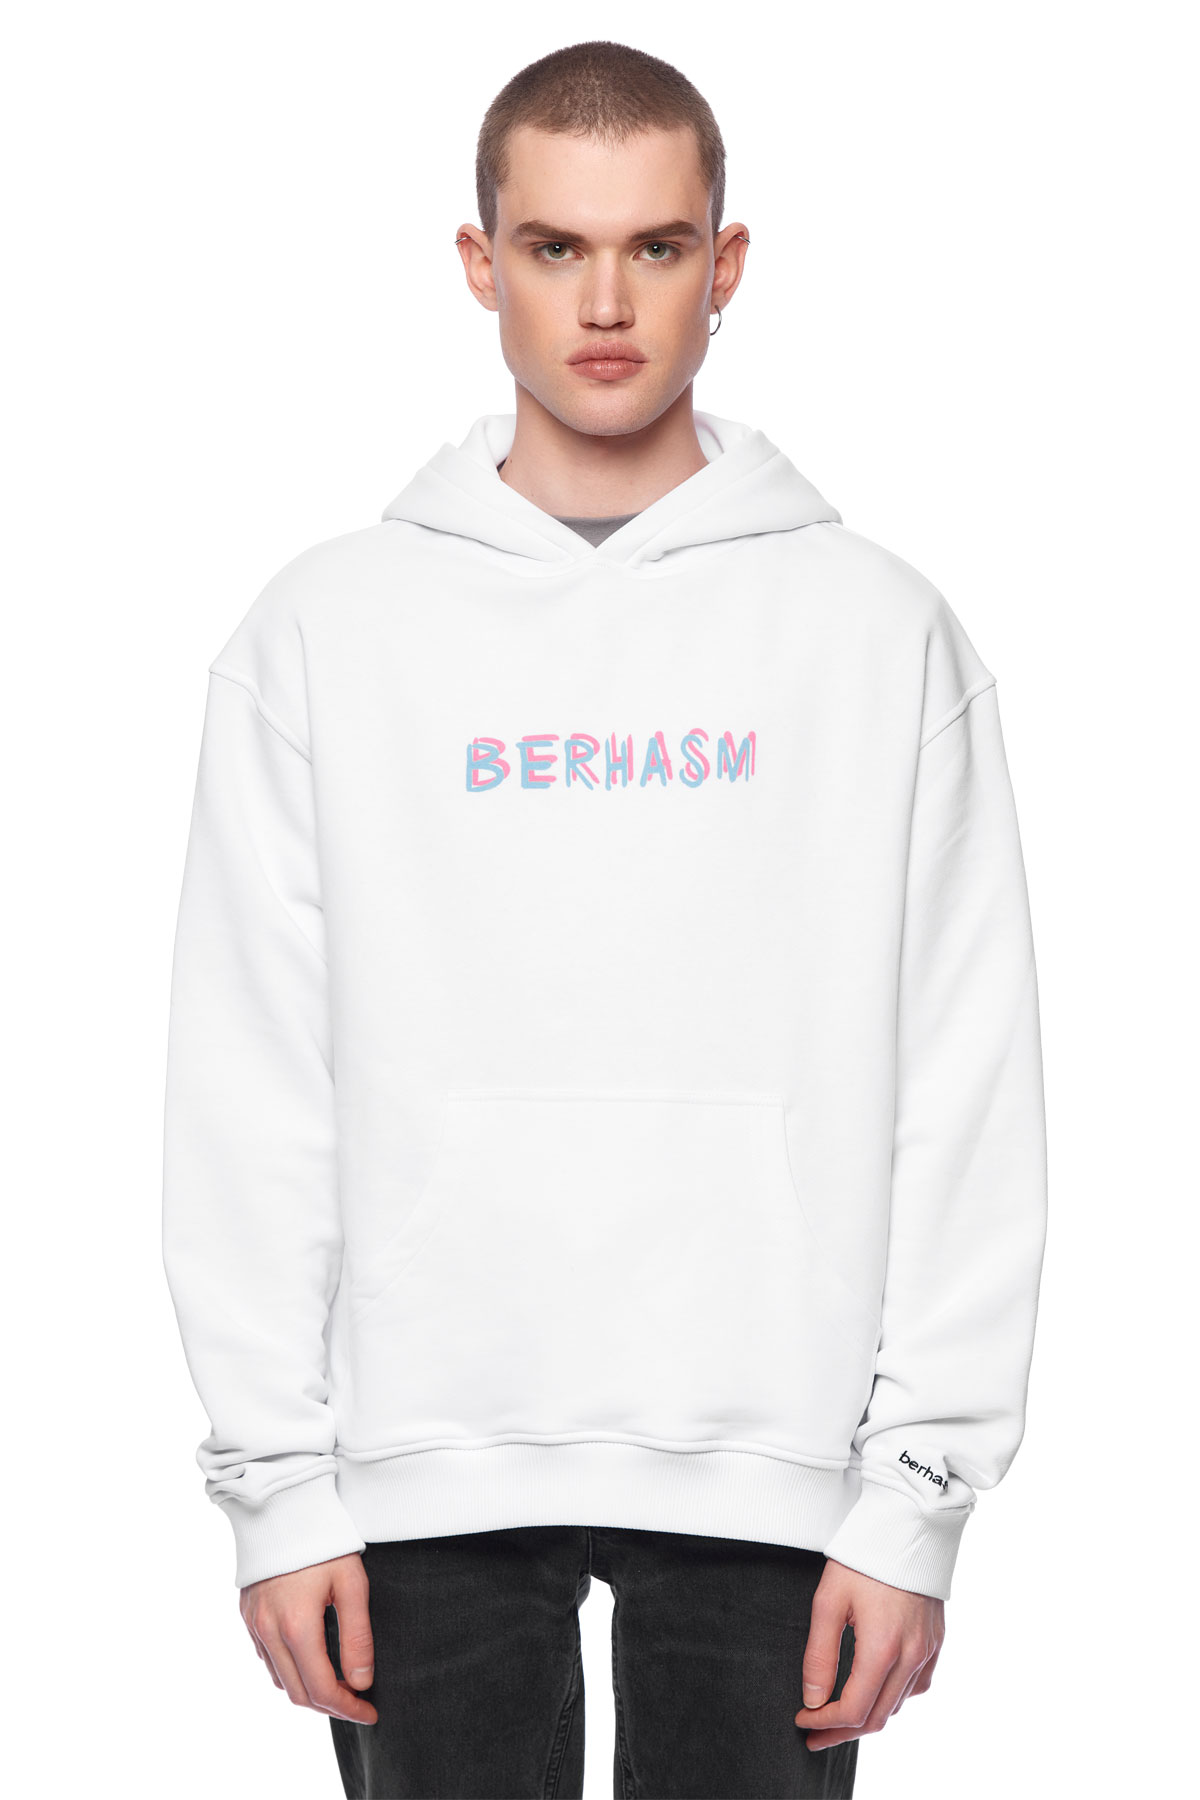 Berhasm Marshmello print hoodie